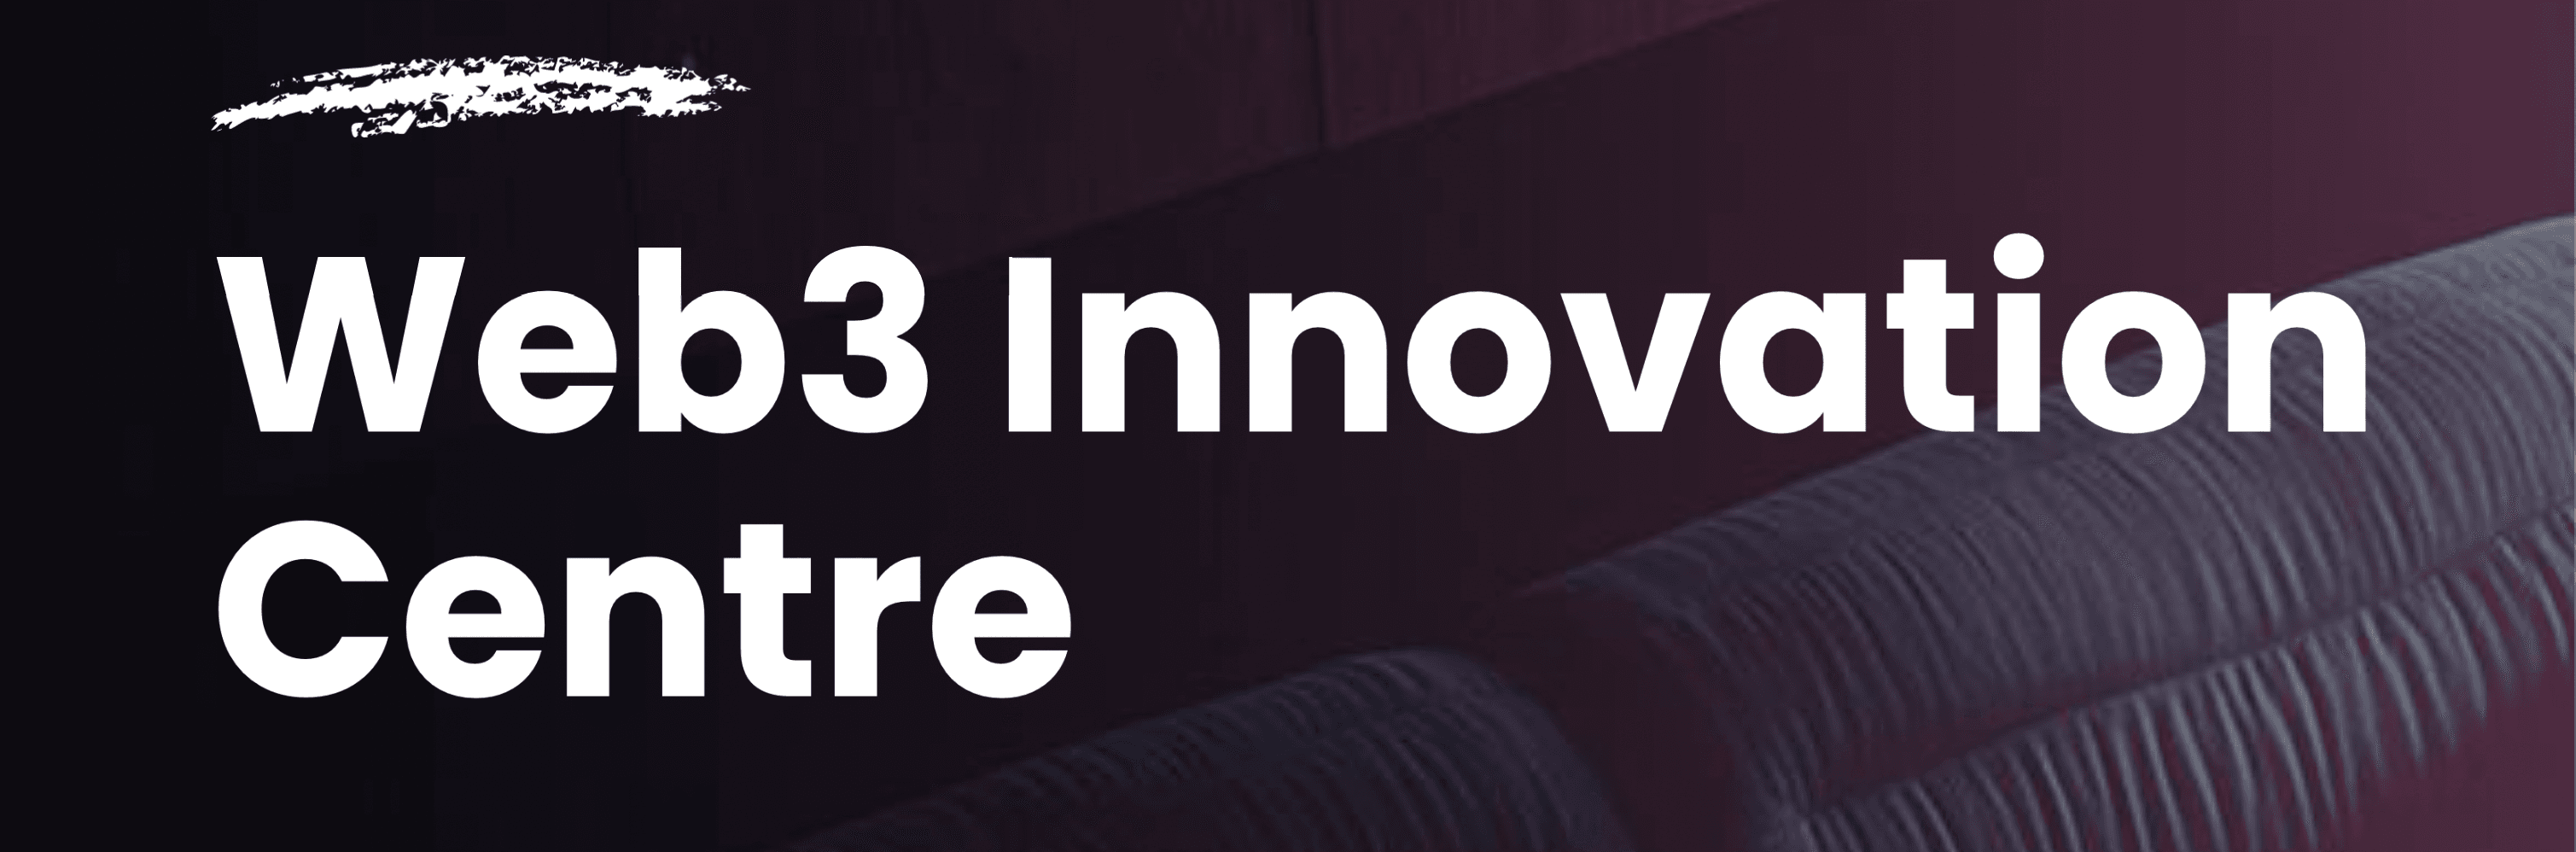 web3_innovation バナー